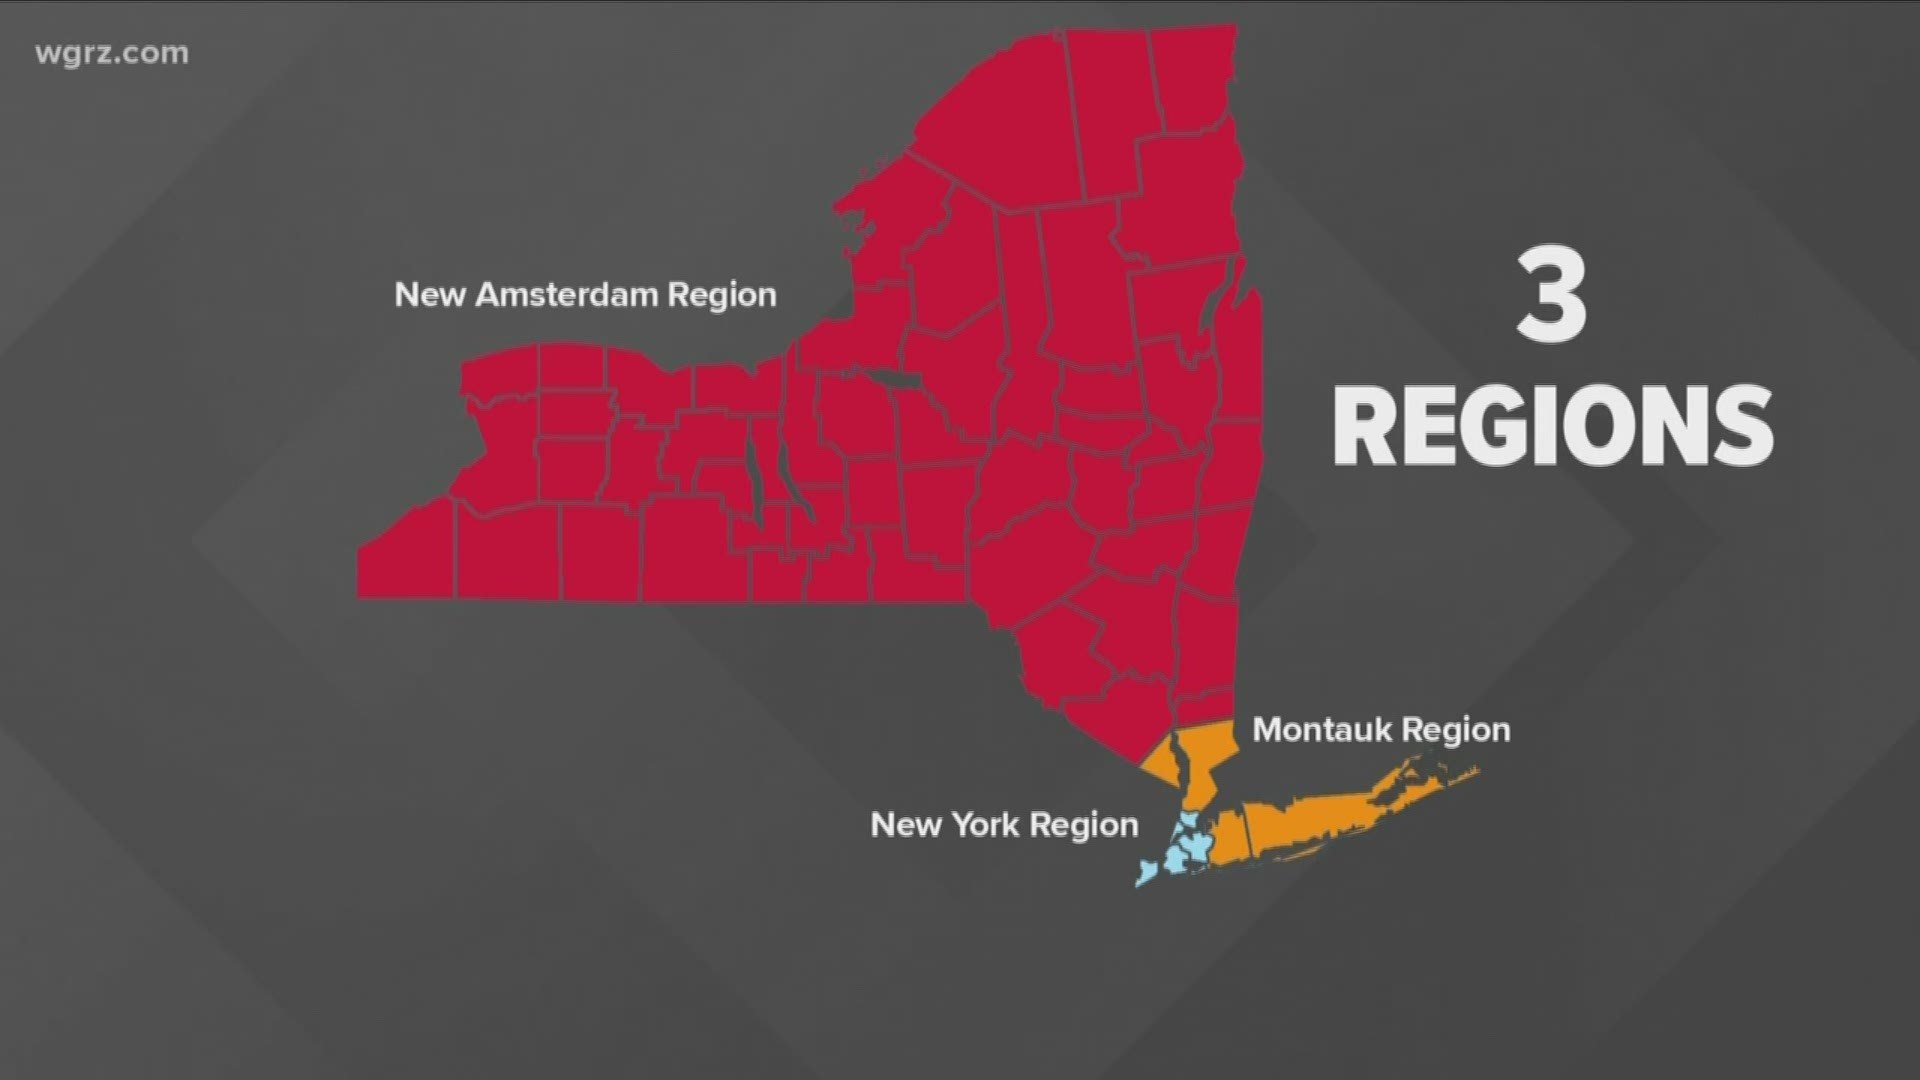 The bill would split New York State into three regions